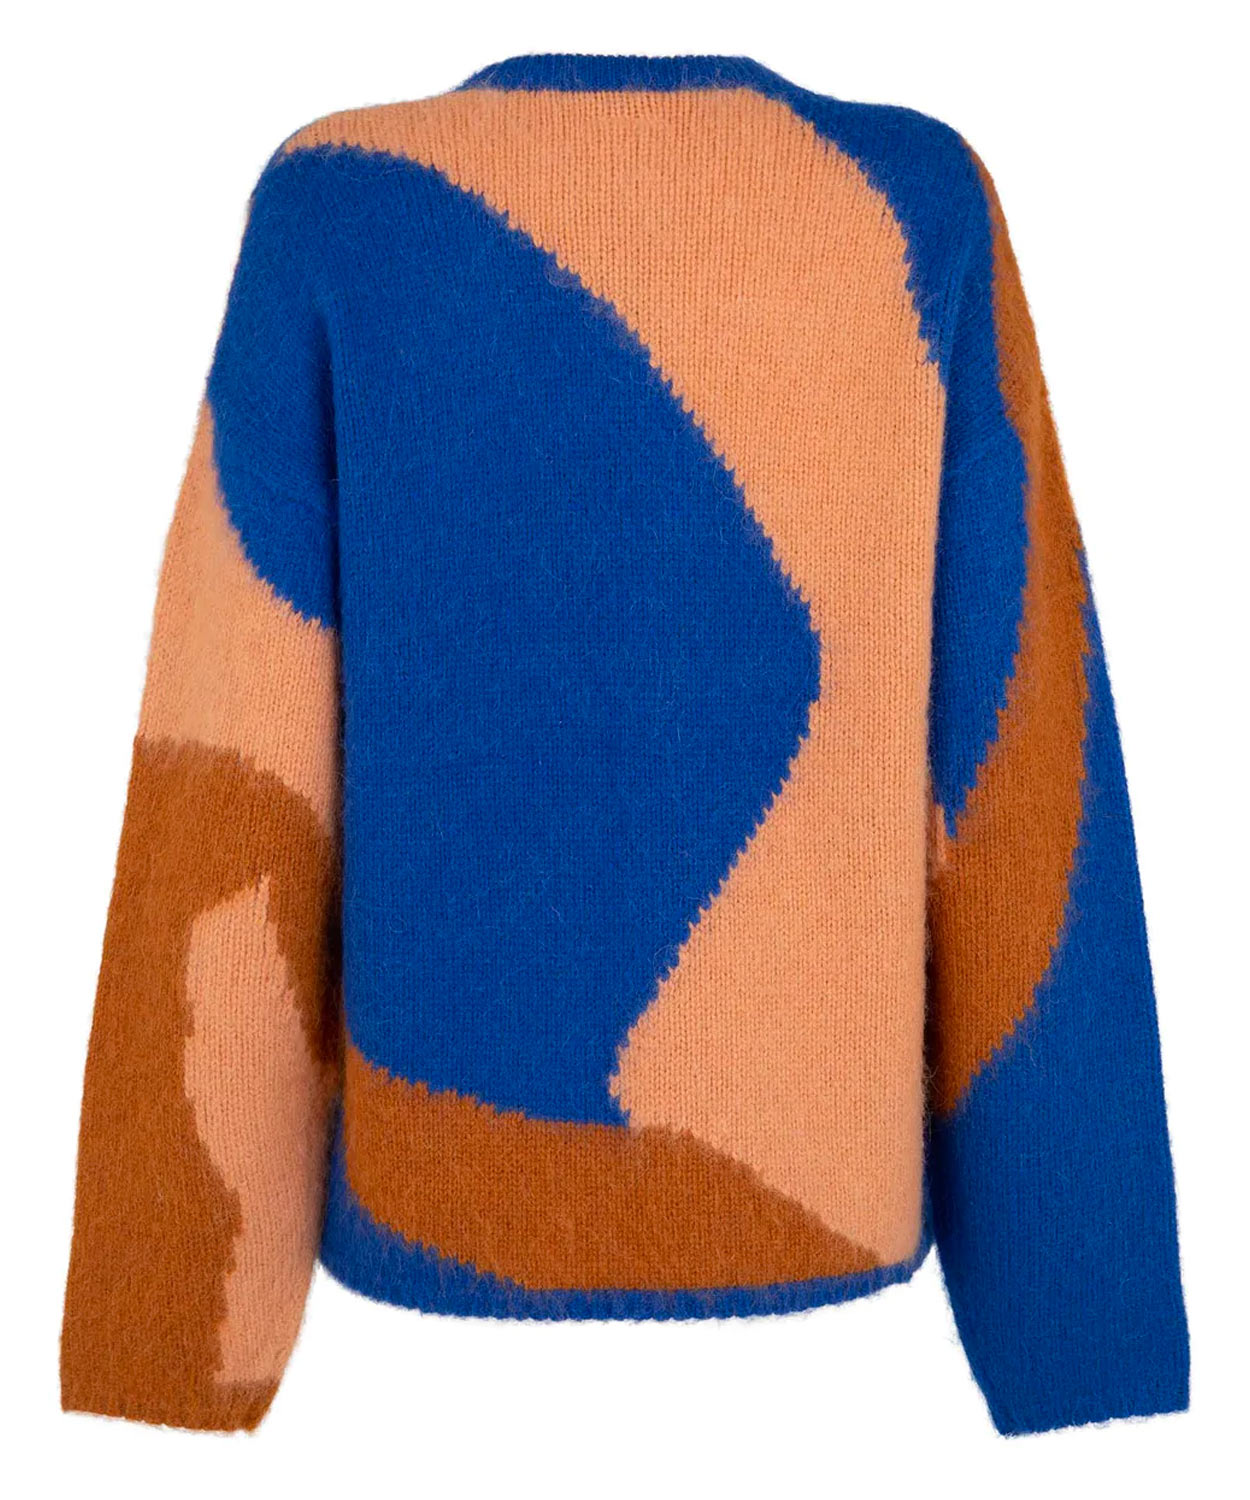 Bowie Sweater